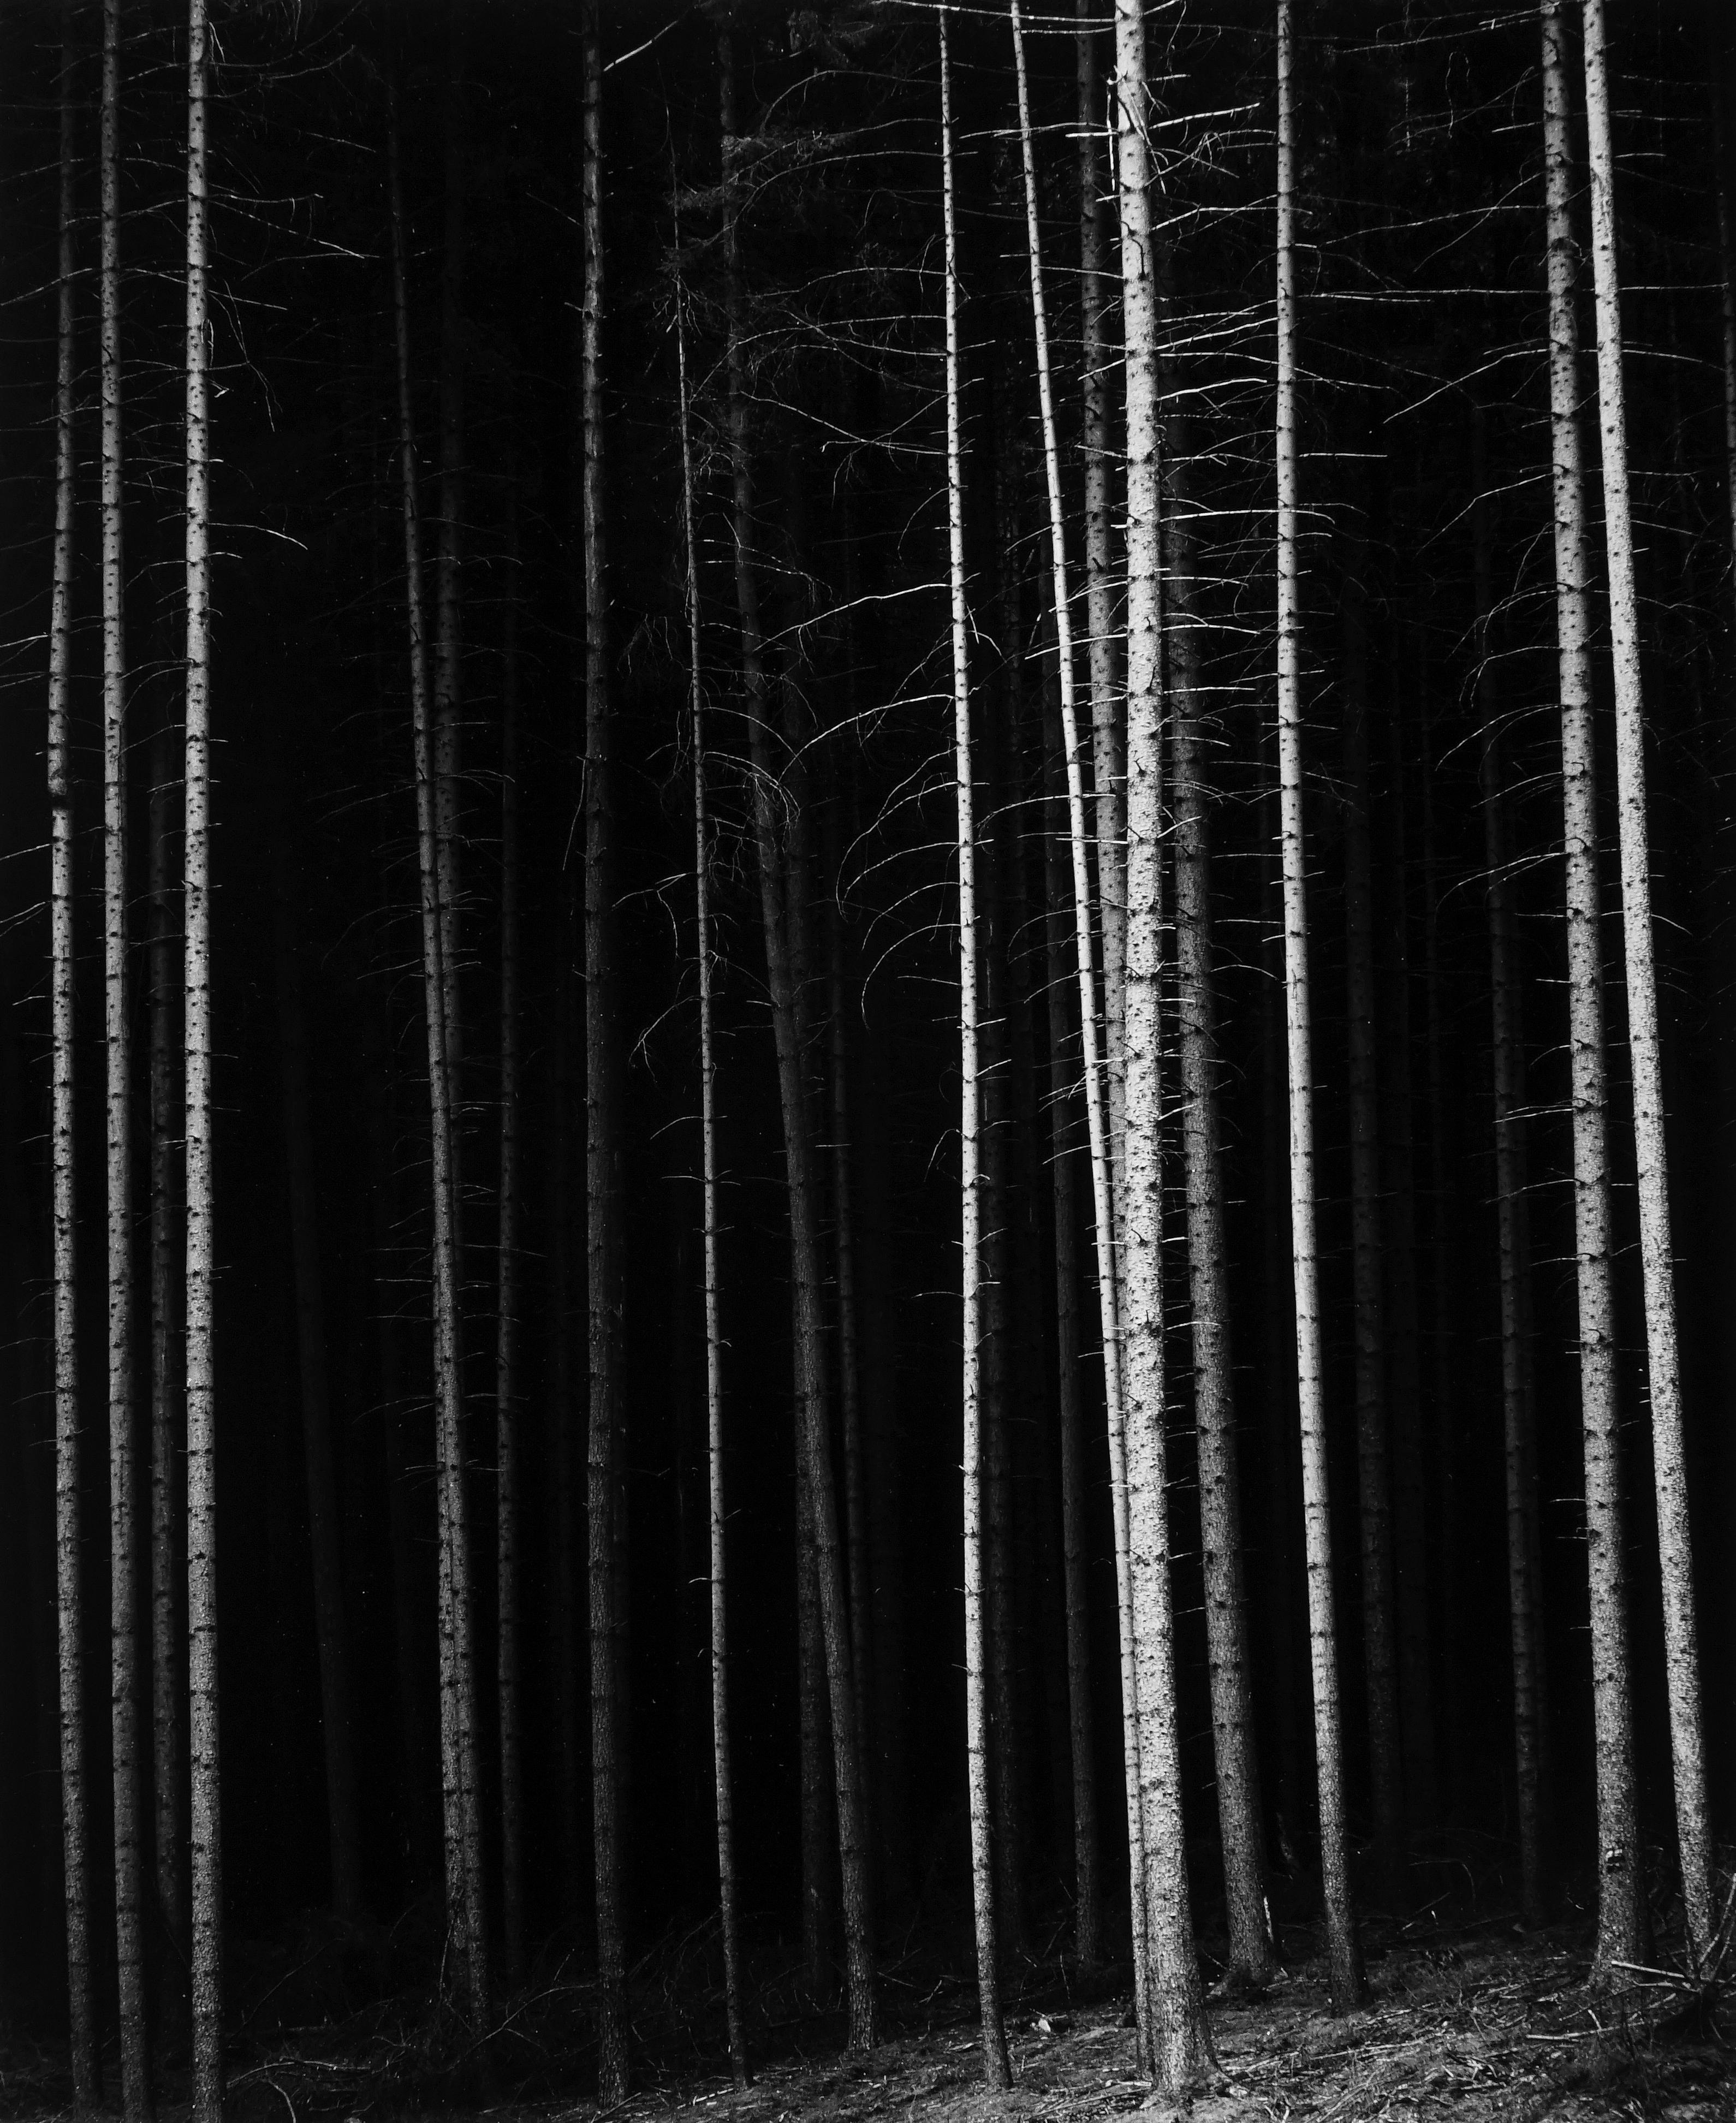 Brett Weston Black and White Photograph - Trees, CA, 1968 (Printed 1970's)